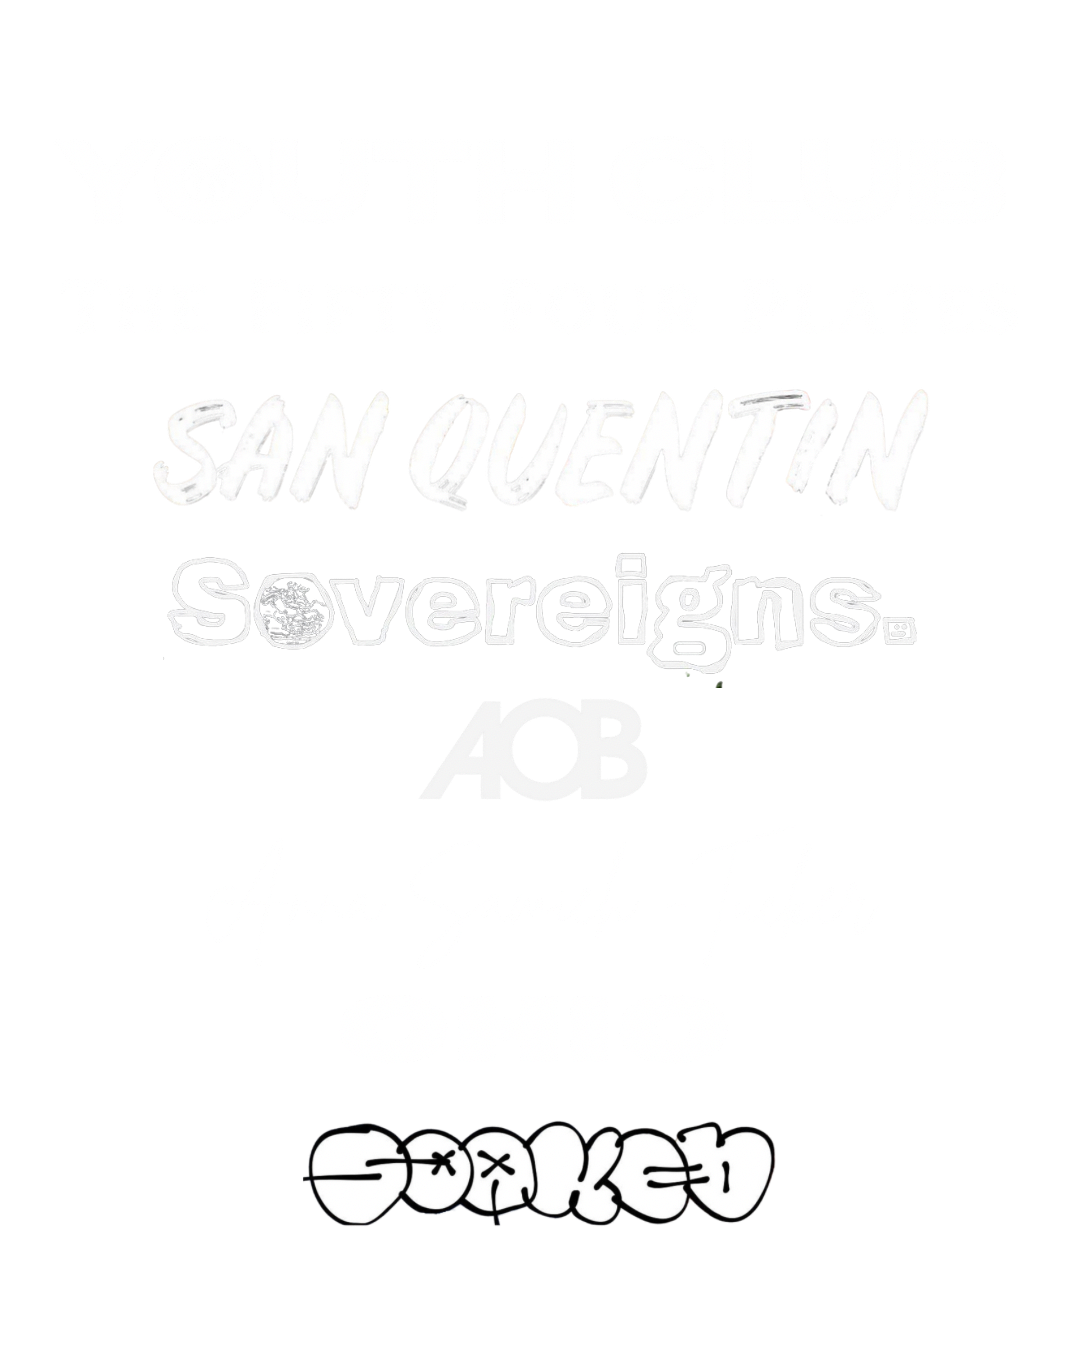 YOUTH CLUB, THE FIFTY-FOUR PLATES, SAN QUENTIN, Sovereigns, AOB, Anna Samieh-Tucker, OHIO, SOAKED